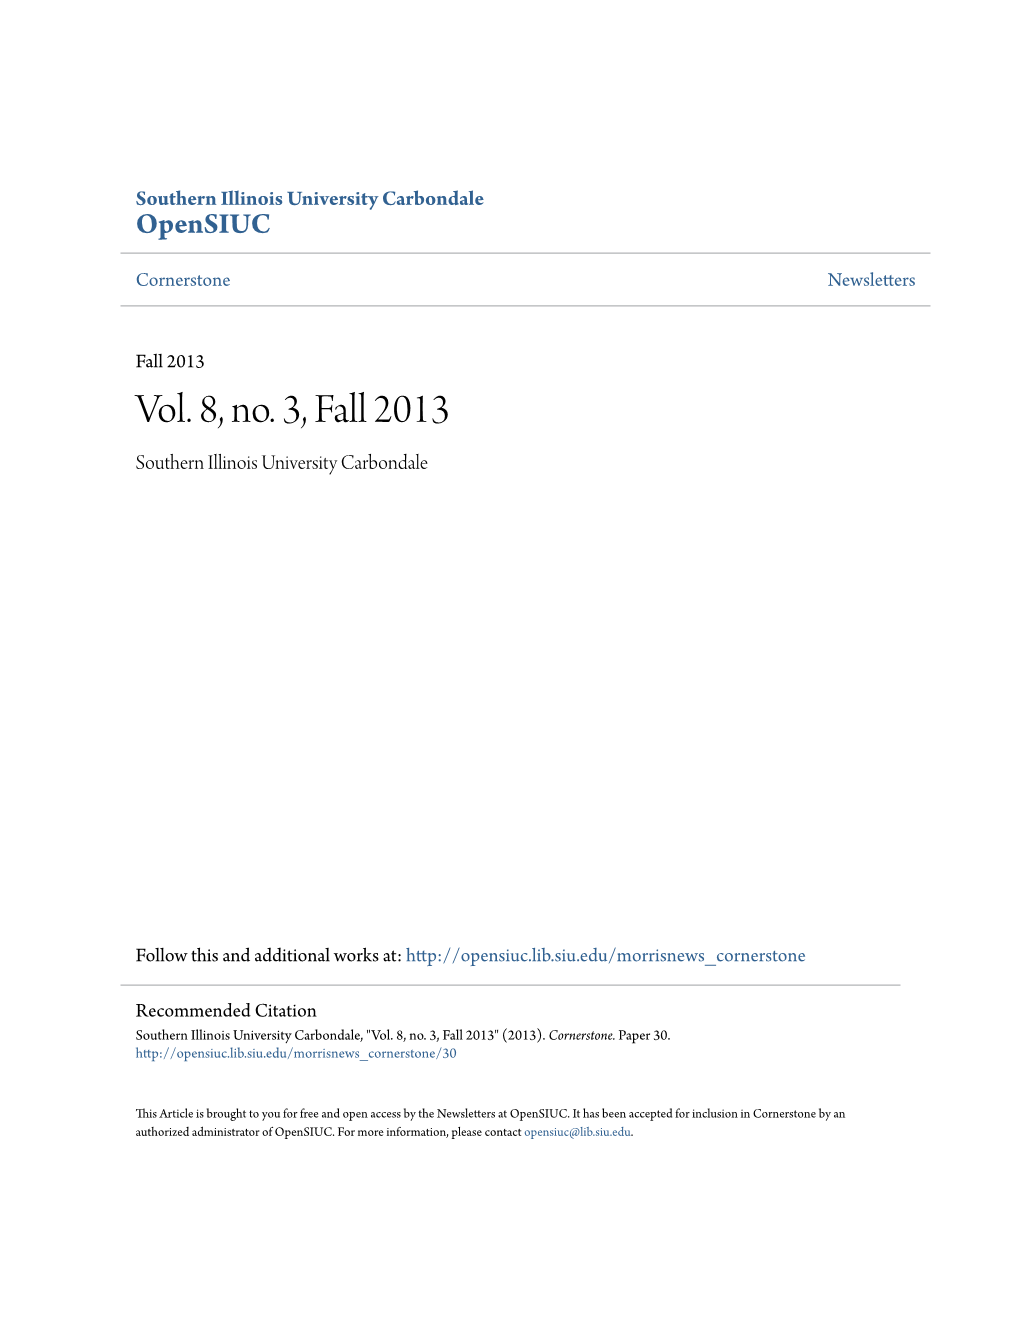 Vol. 8, No. 3, Fall 2013 Southern Illinois University Carbondale